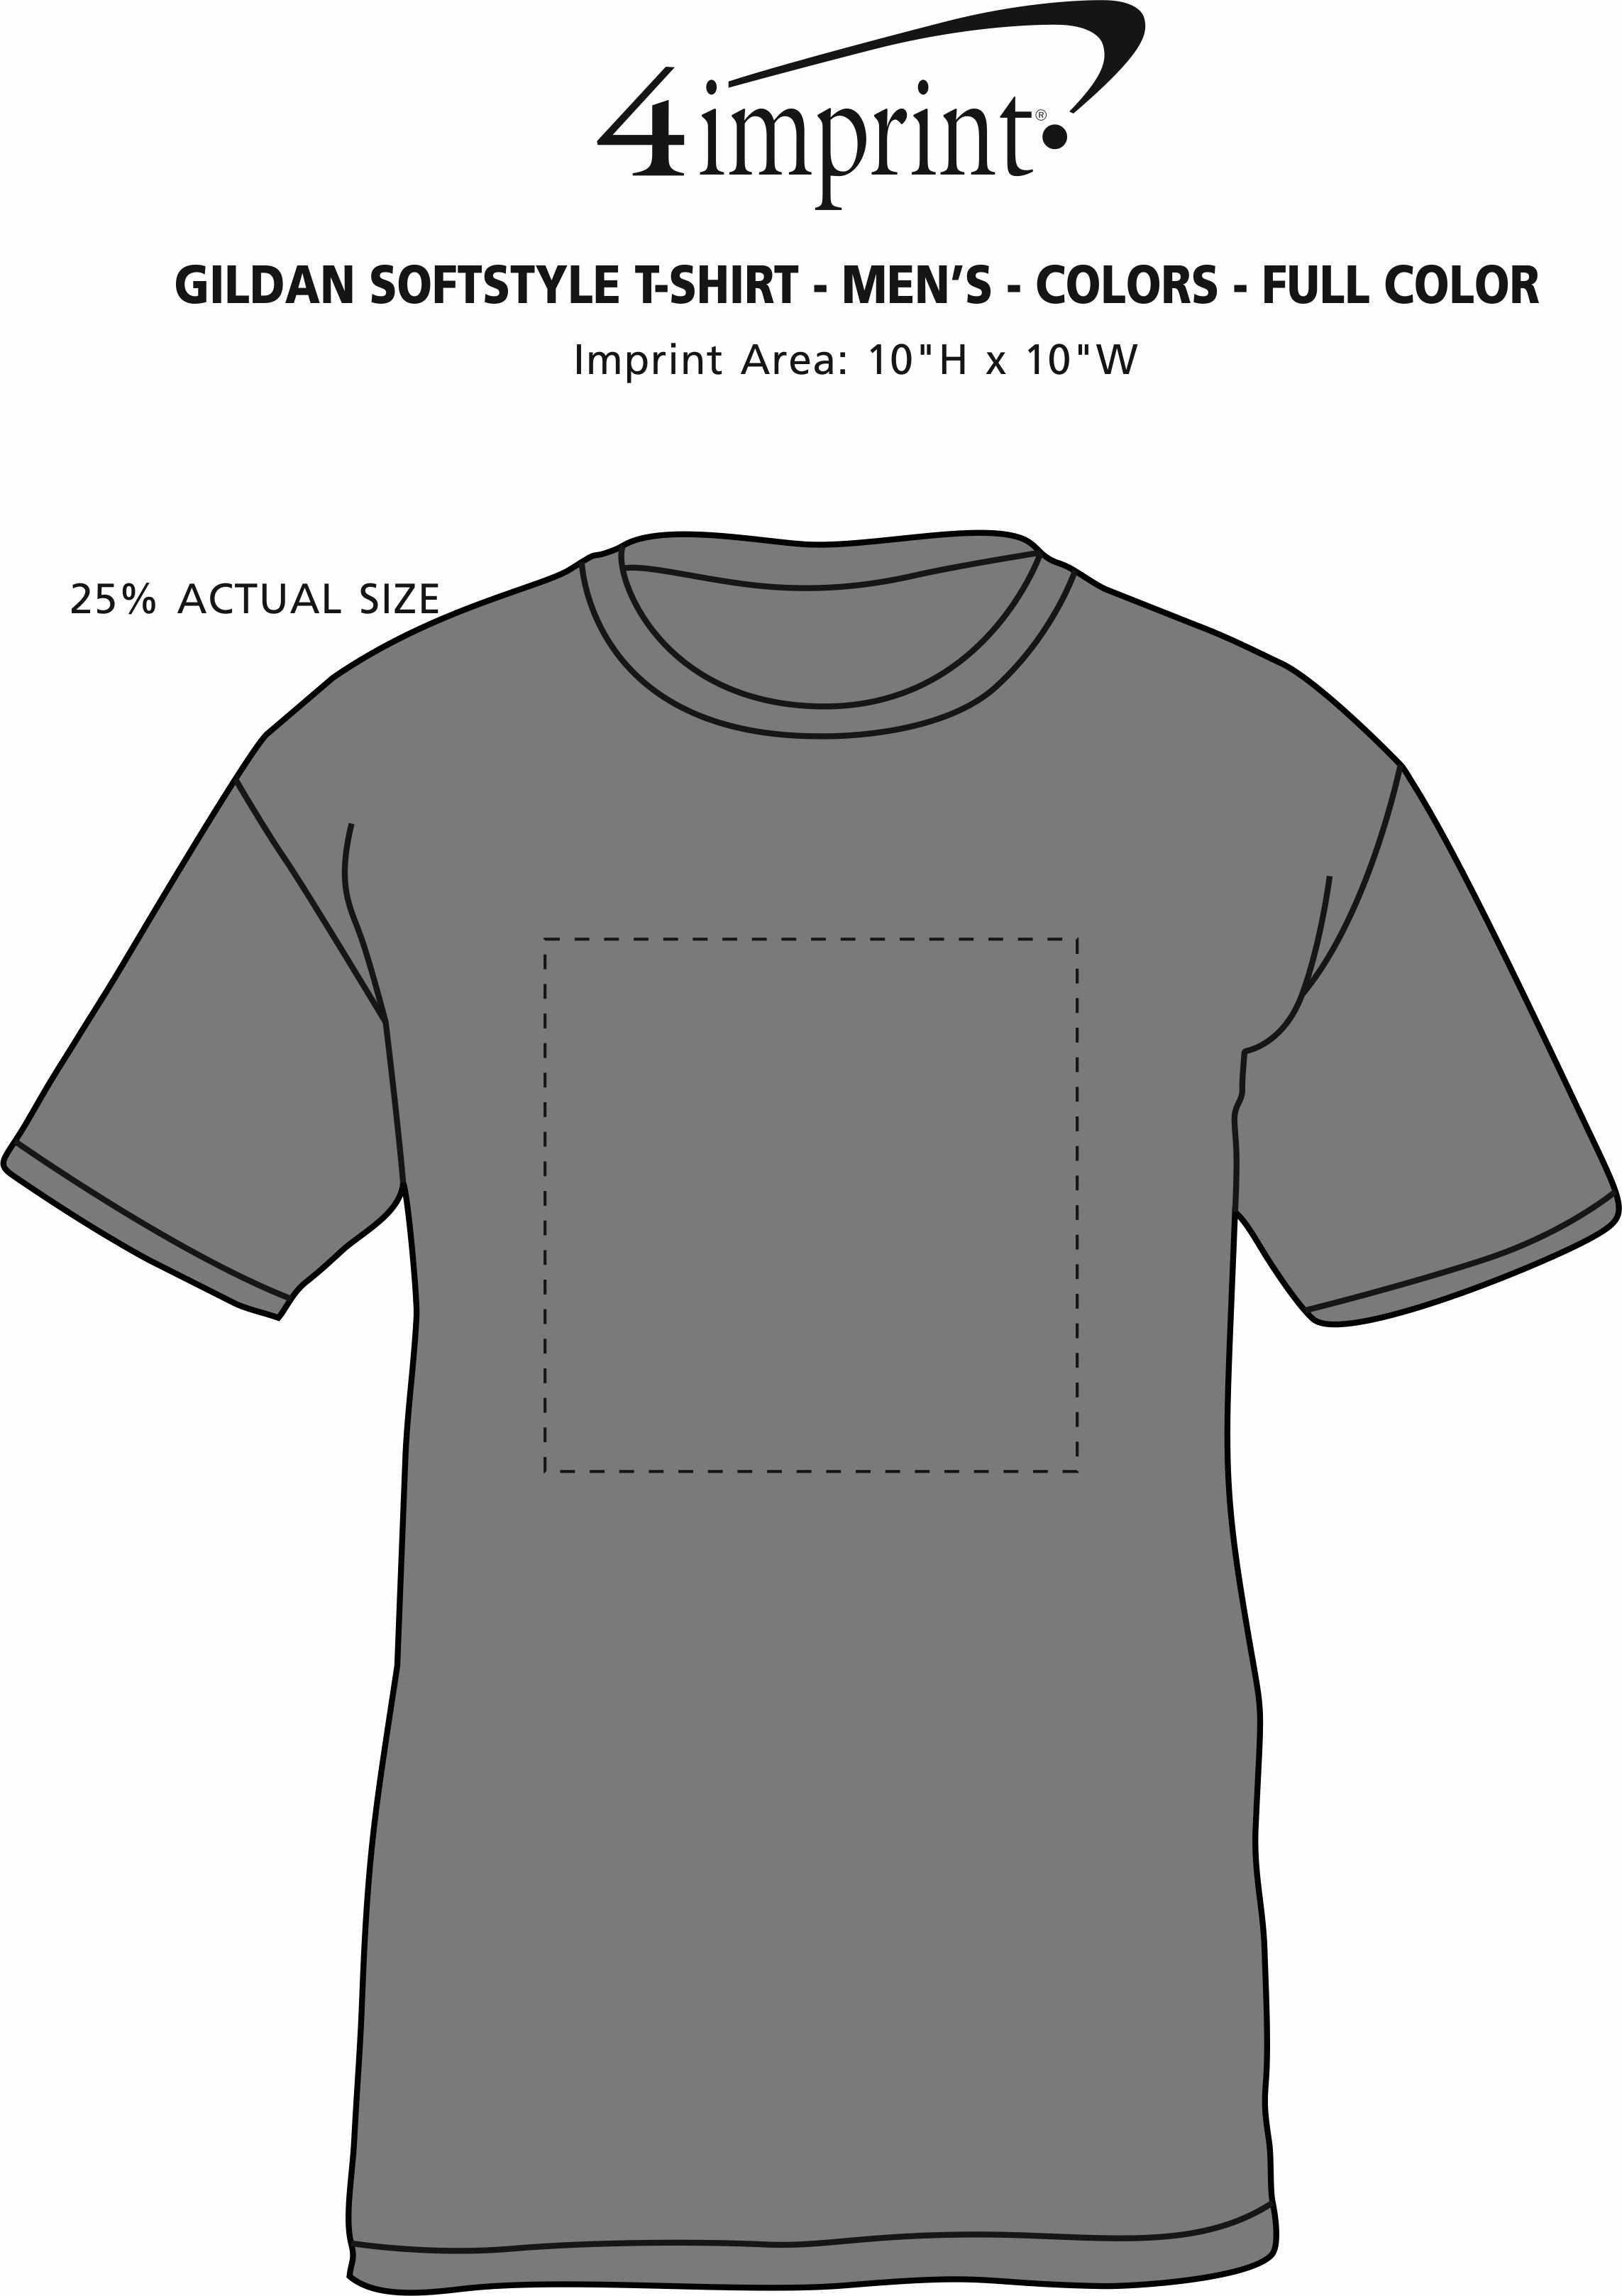 Imprint Area of Gildan Softstyle T-Shirt - Men's - Colors - Full Color